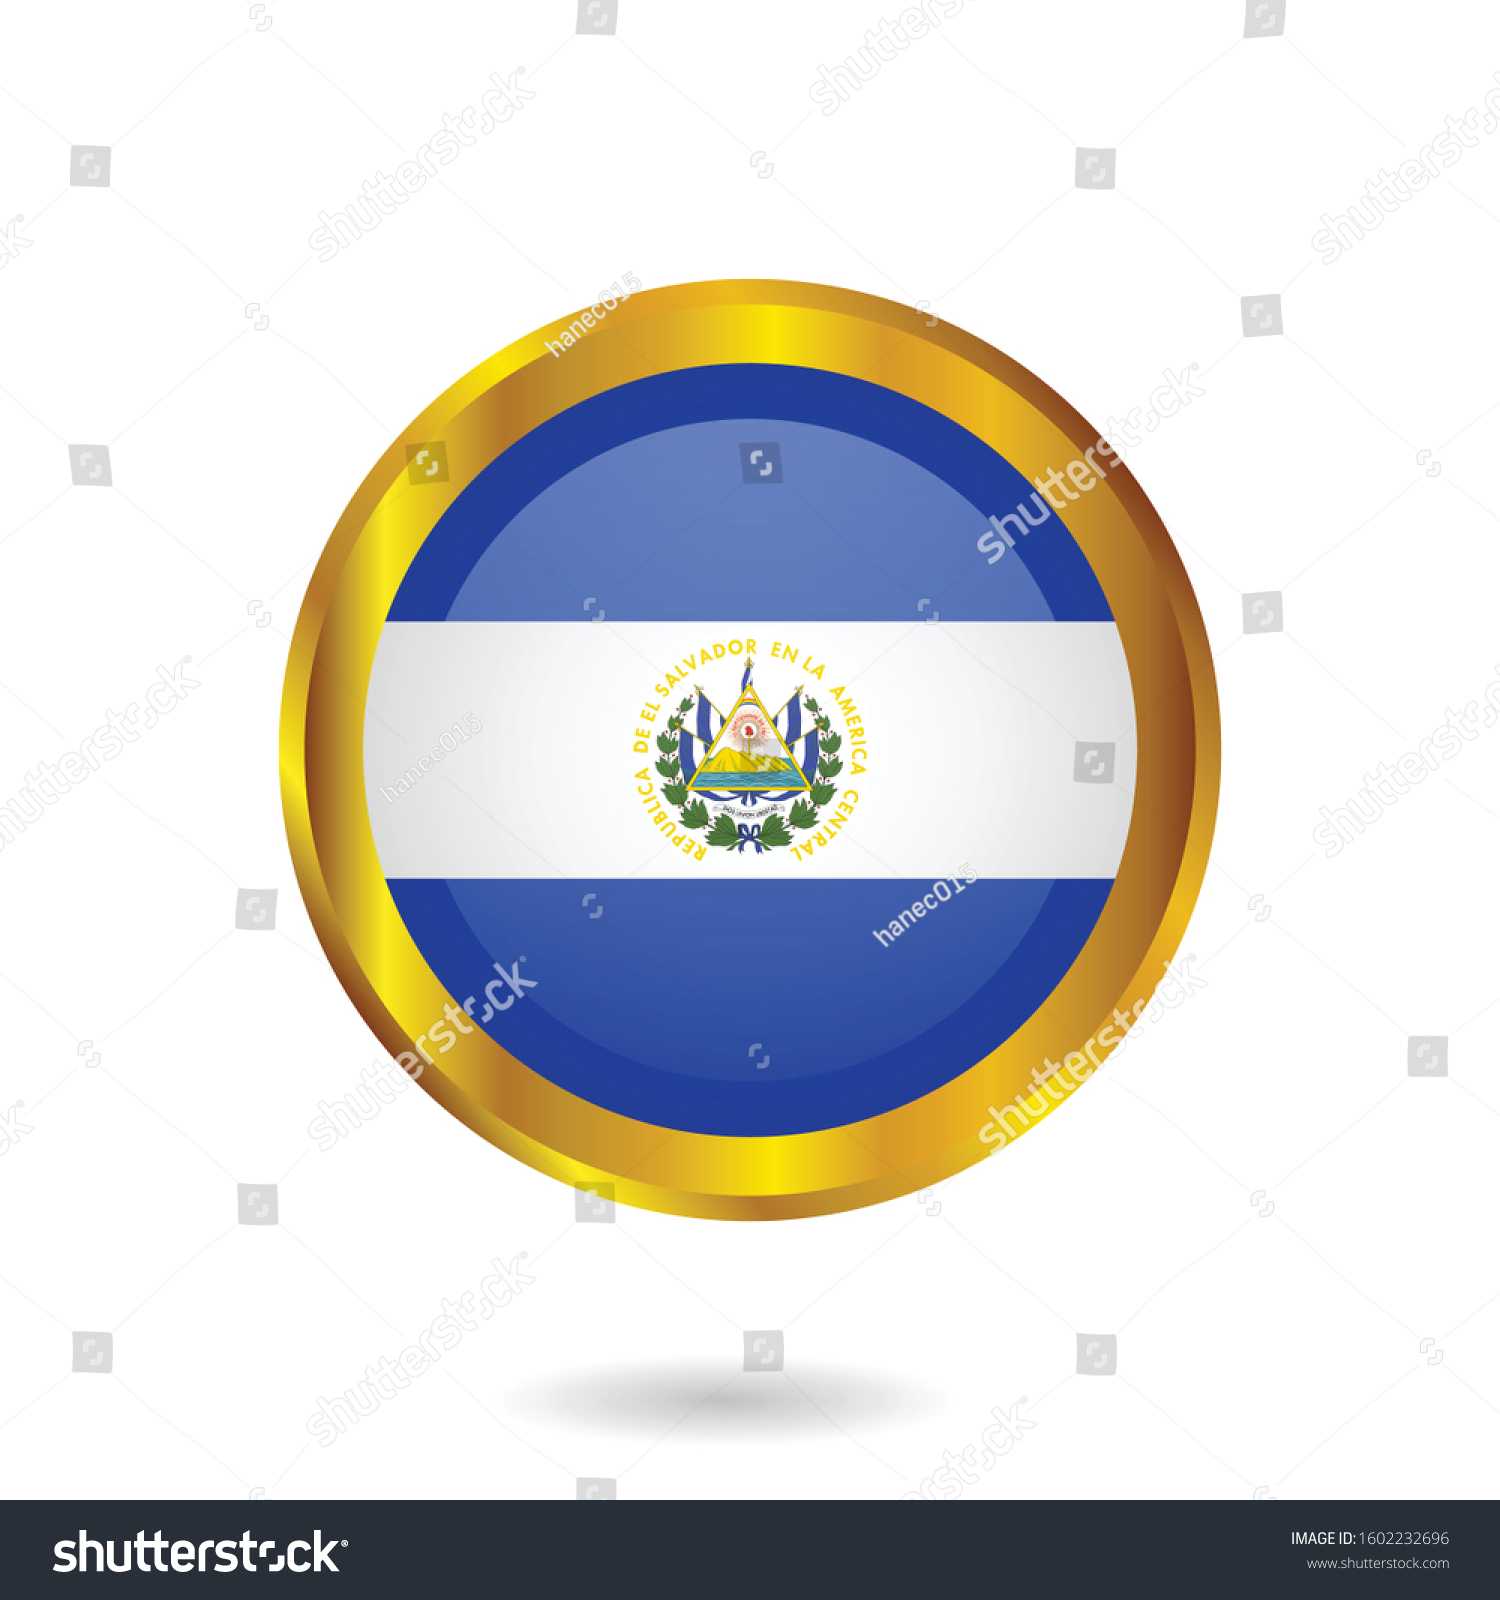 gold El Salvador circle button or label.vector - Royalty Free Stock ...